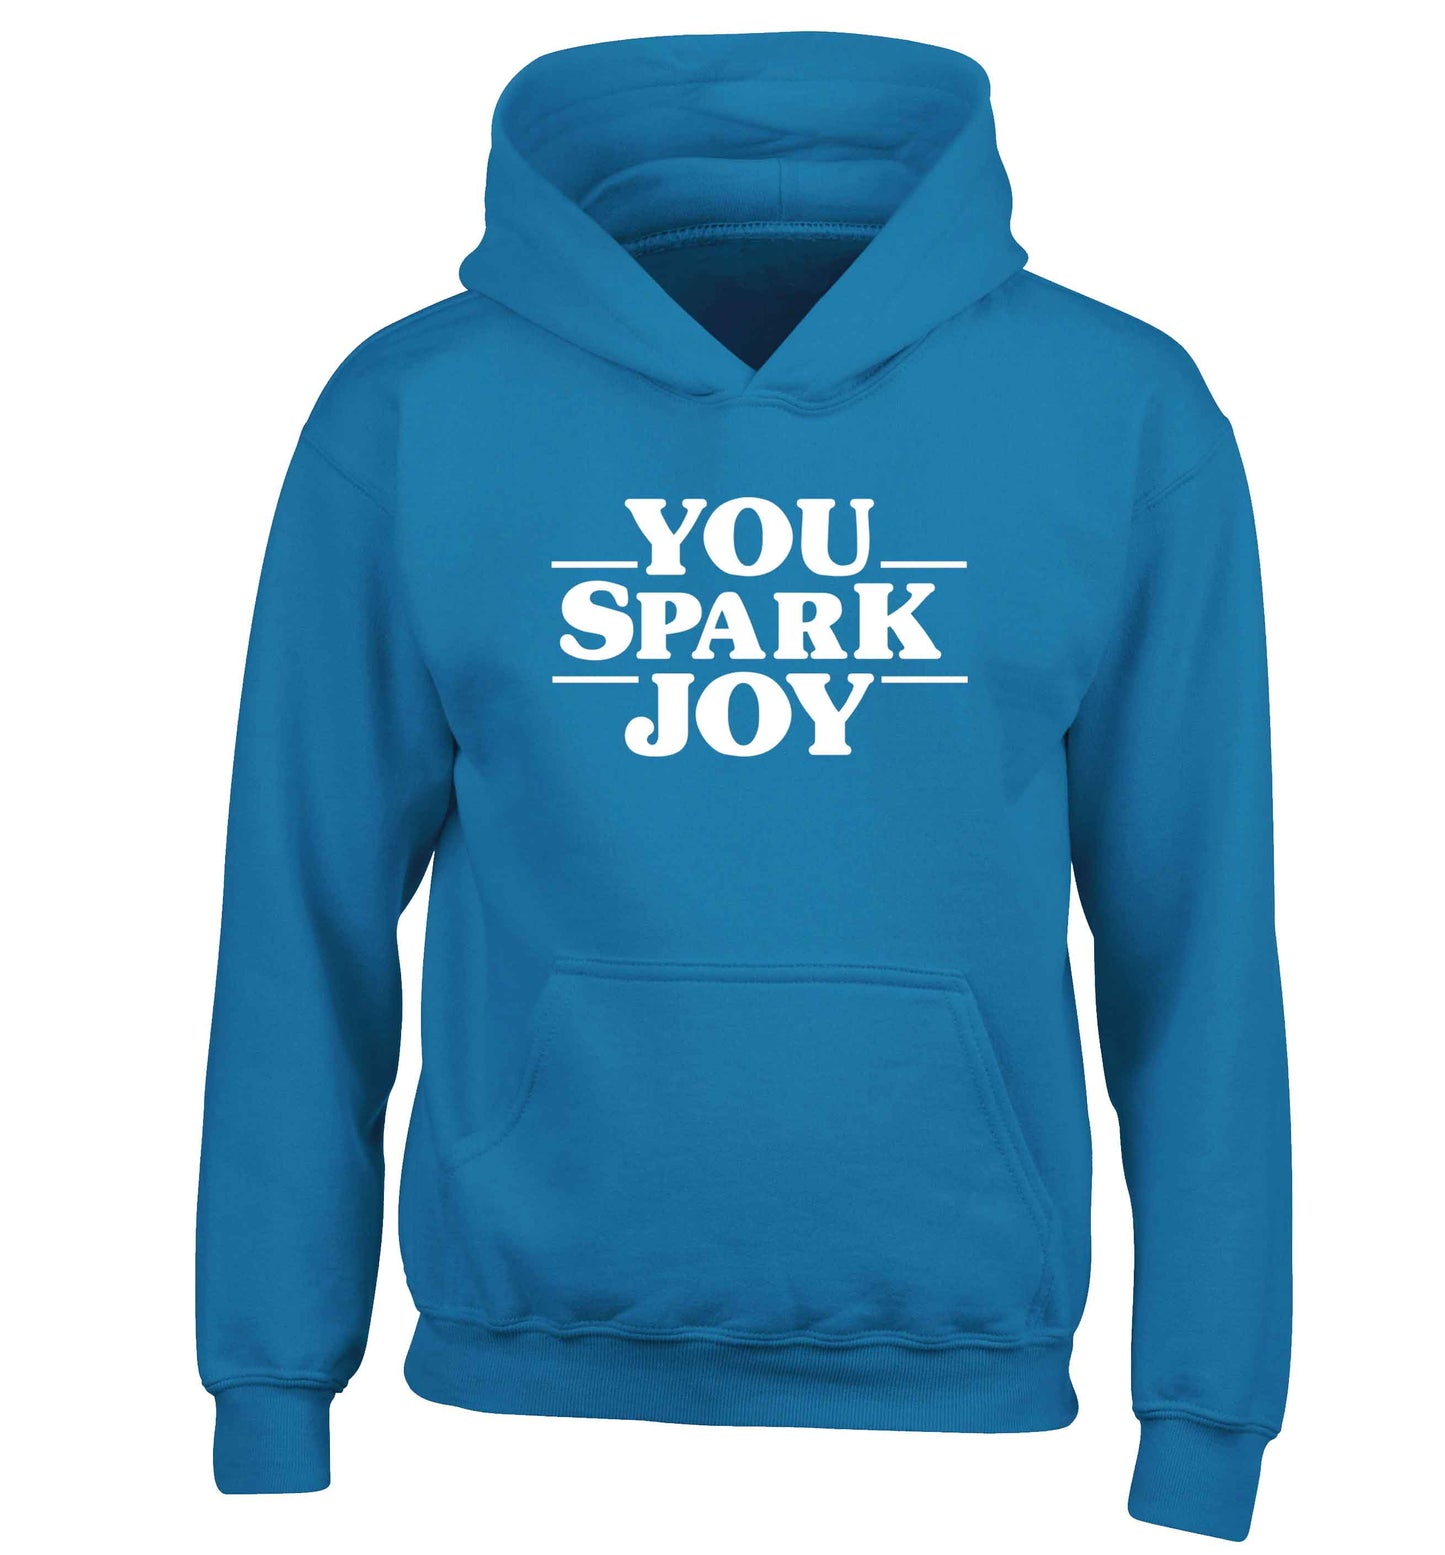 You spark joy children's blue hoodie 12-13 Years